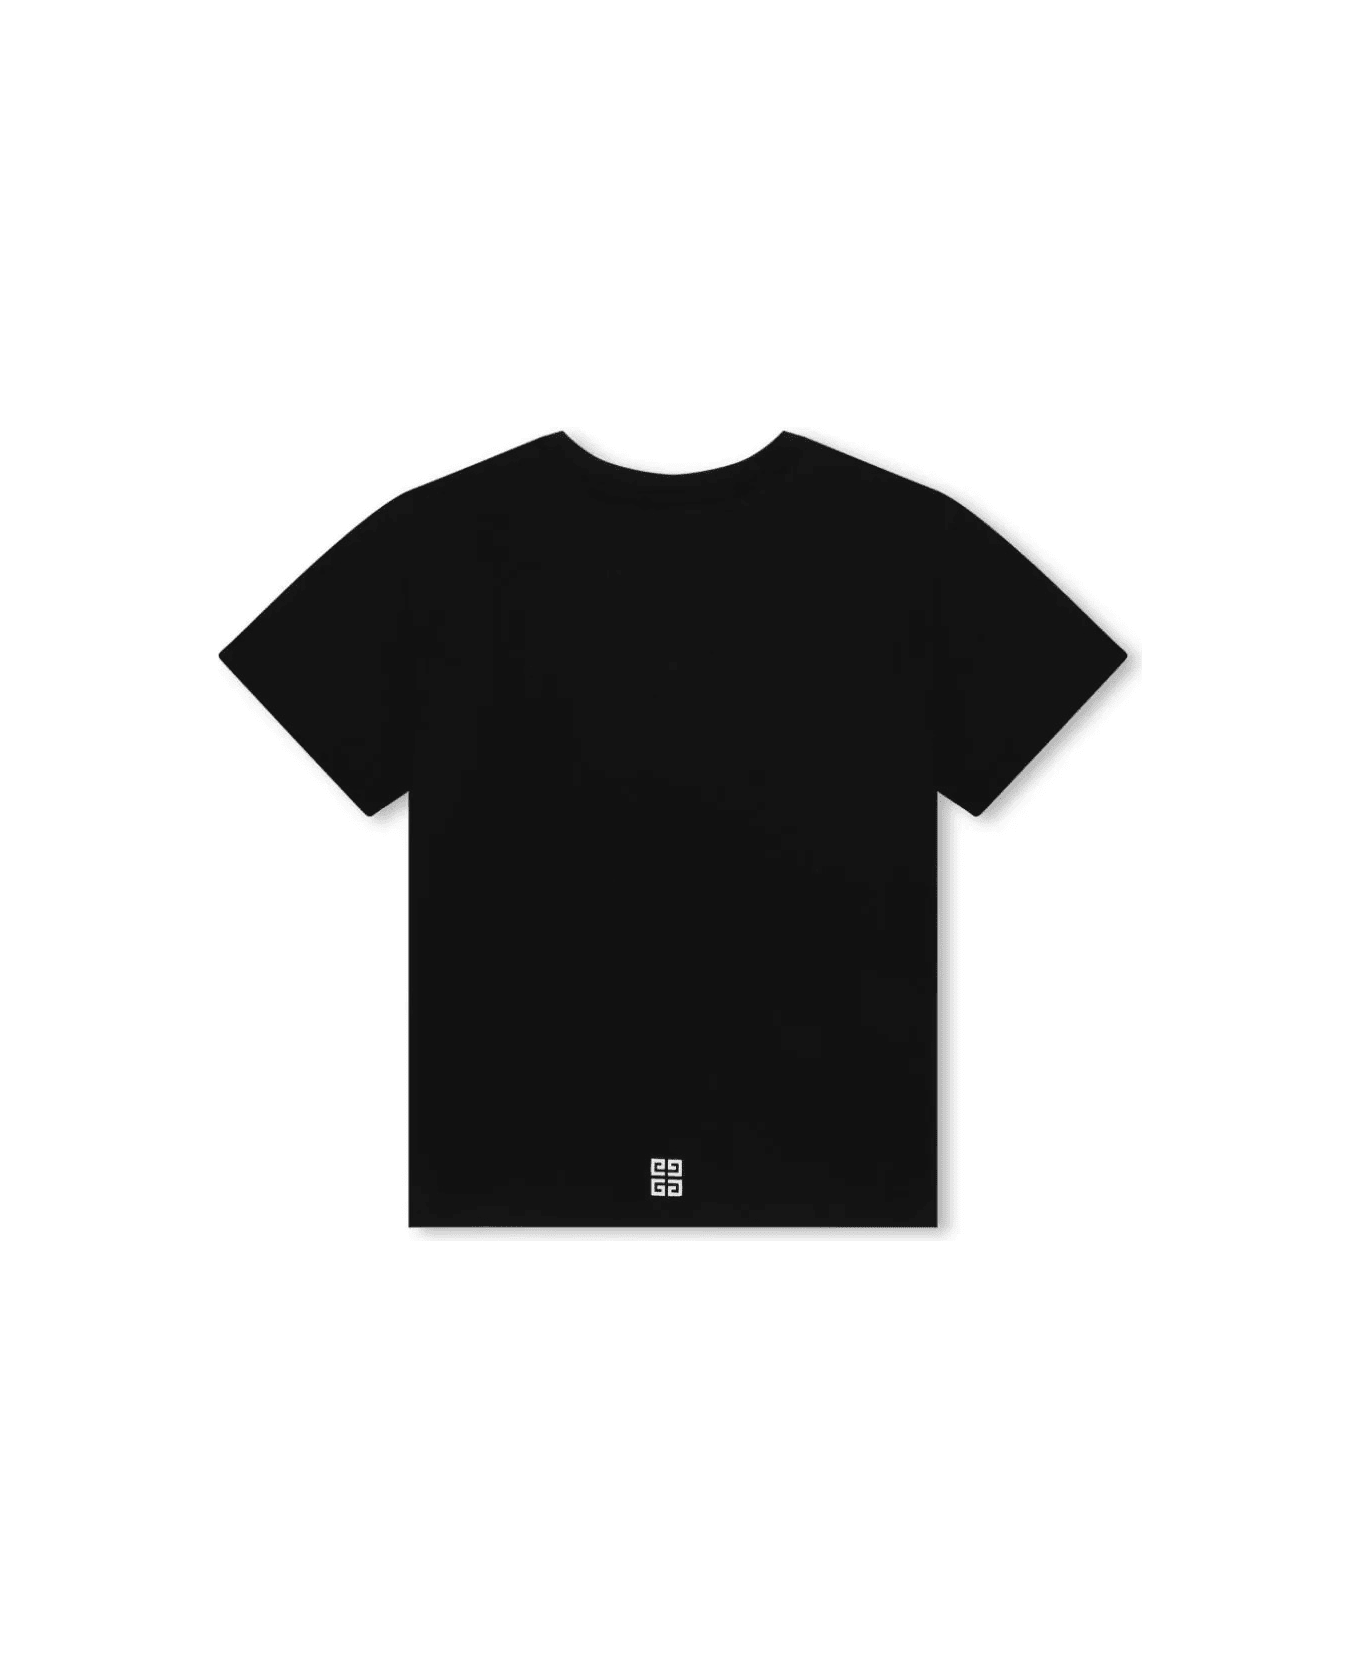 Givenchy Black Givenchy 4g T-shirt - BLACK